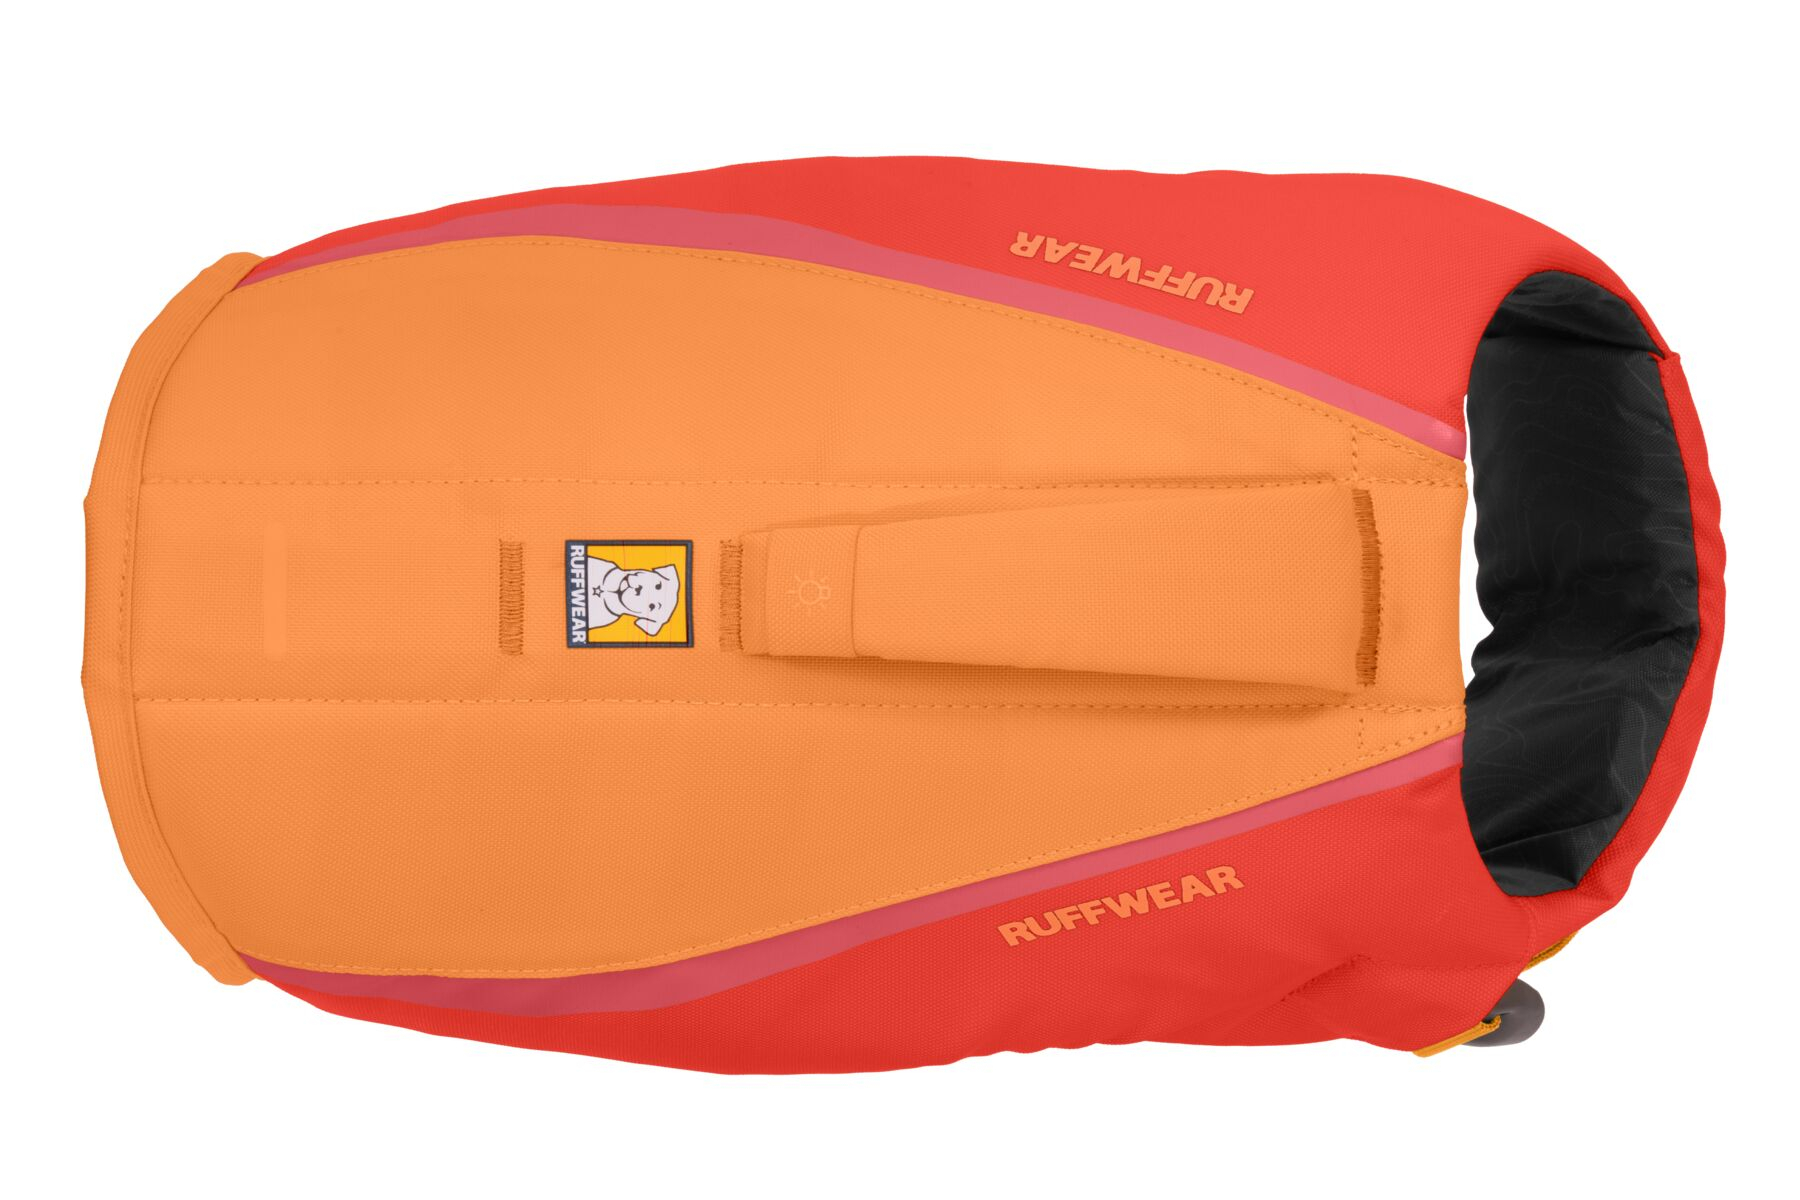 Float Coat Chaleco salvavidas Sockeye Red de Ruffwear - varias tallas disponibles